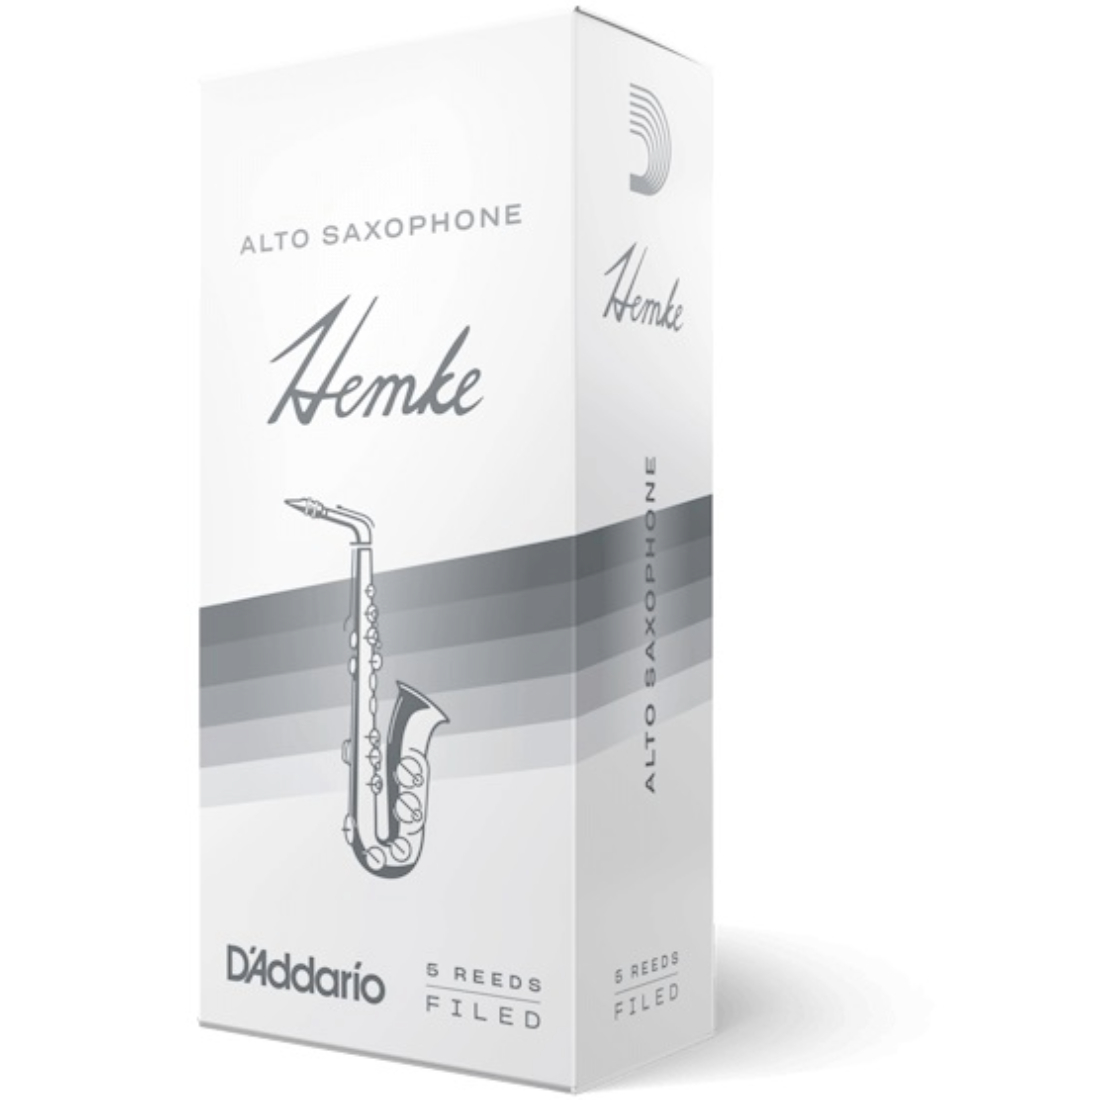 White and grey box of 5 Hemke alto saxophone reeds - strength of 3.5